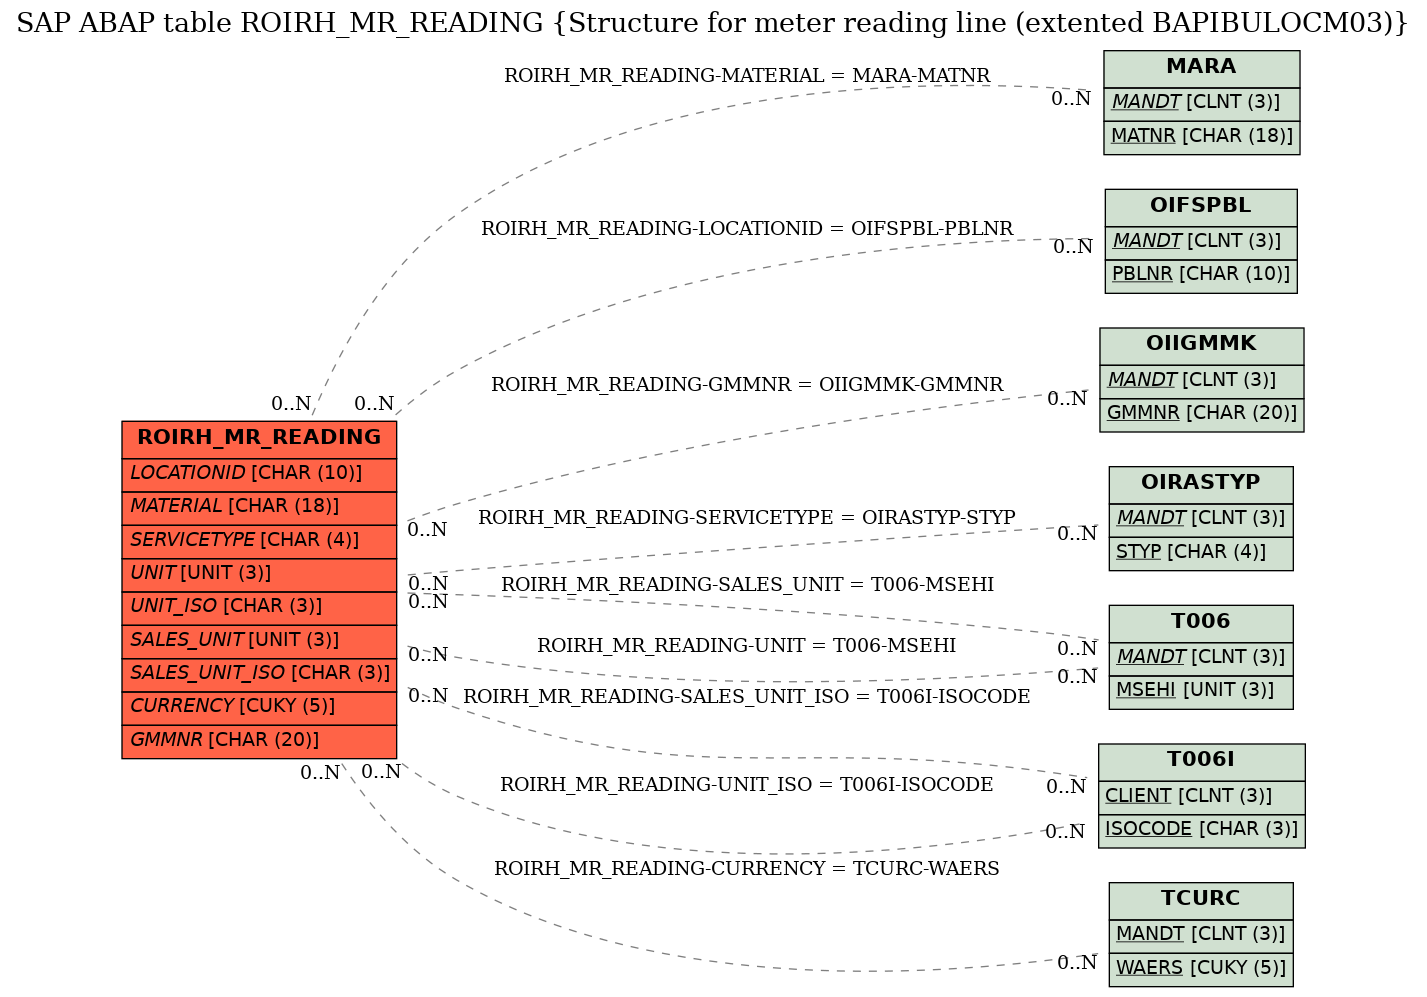 E-R Diagram for table ROIRH_MR_READING (Structure for meter reading line (extented BAPIBULOCM03))